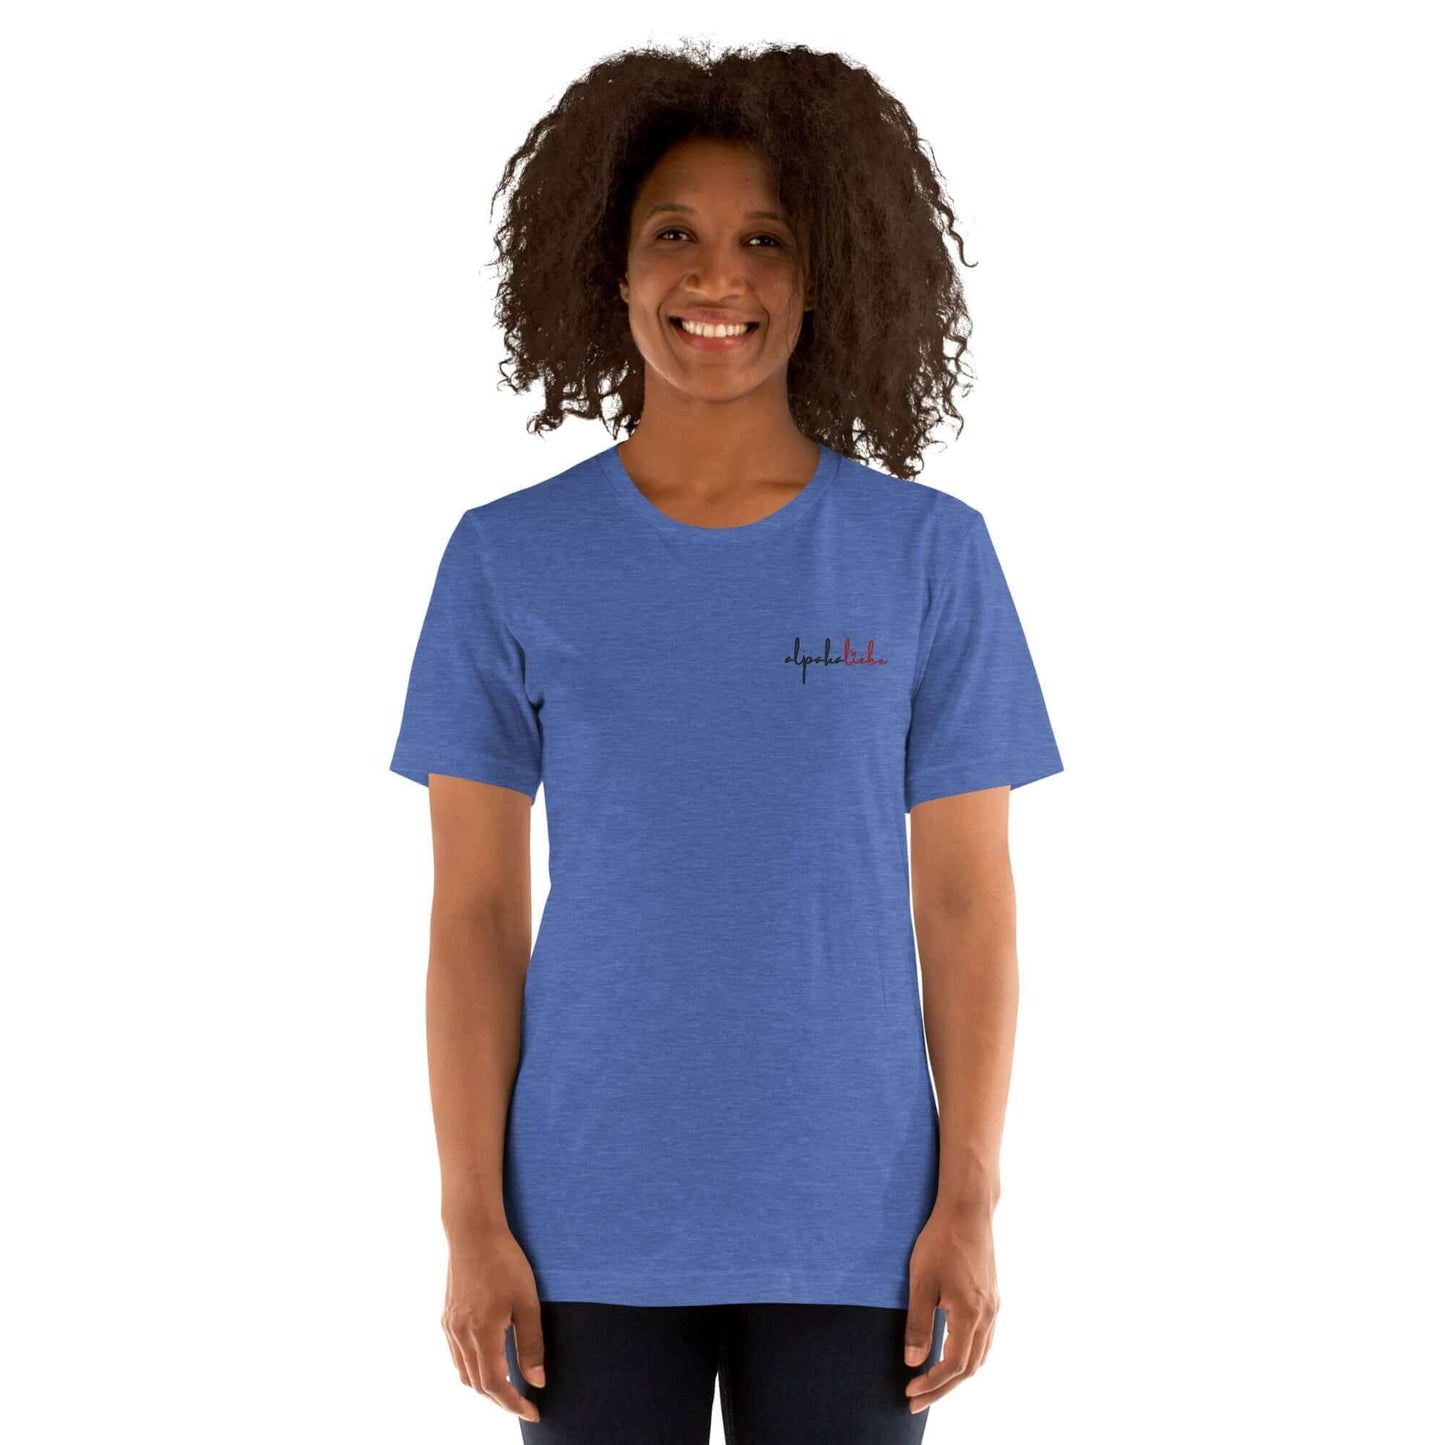 Alpakaliebe T-Shirt mit charmantem Alpaka-Motiv - Alpaka Produkte online kaufen